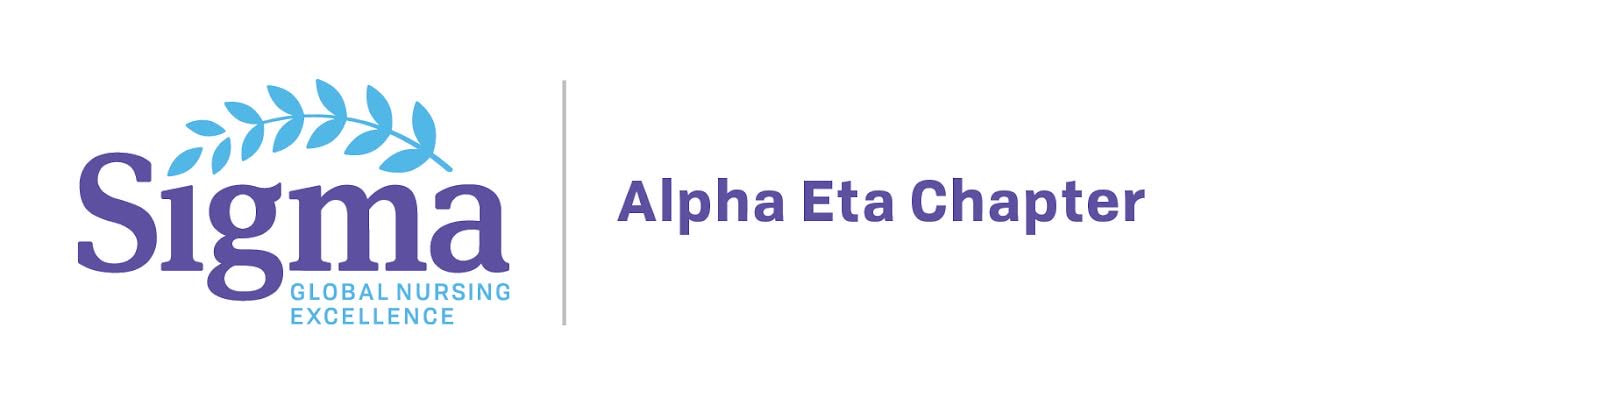 Sigma Global Nursing Excellence Alpha Eta Chapter